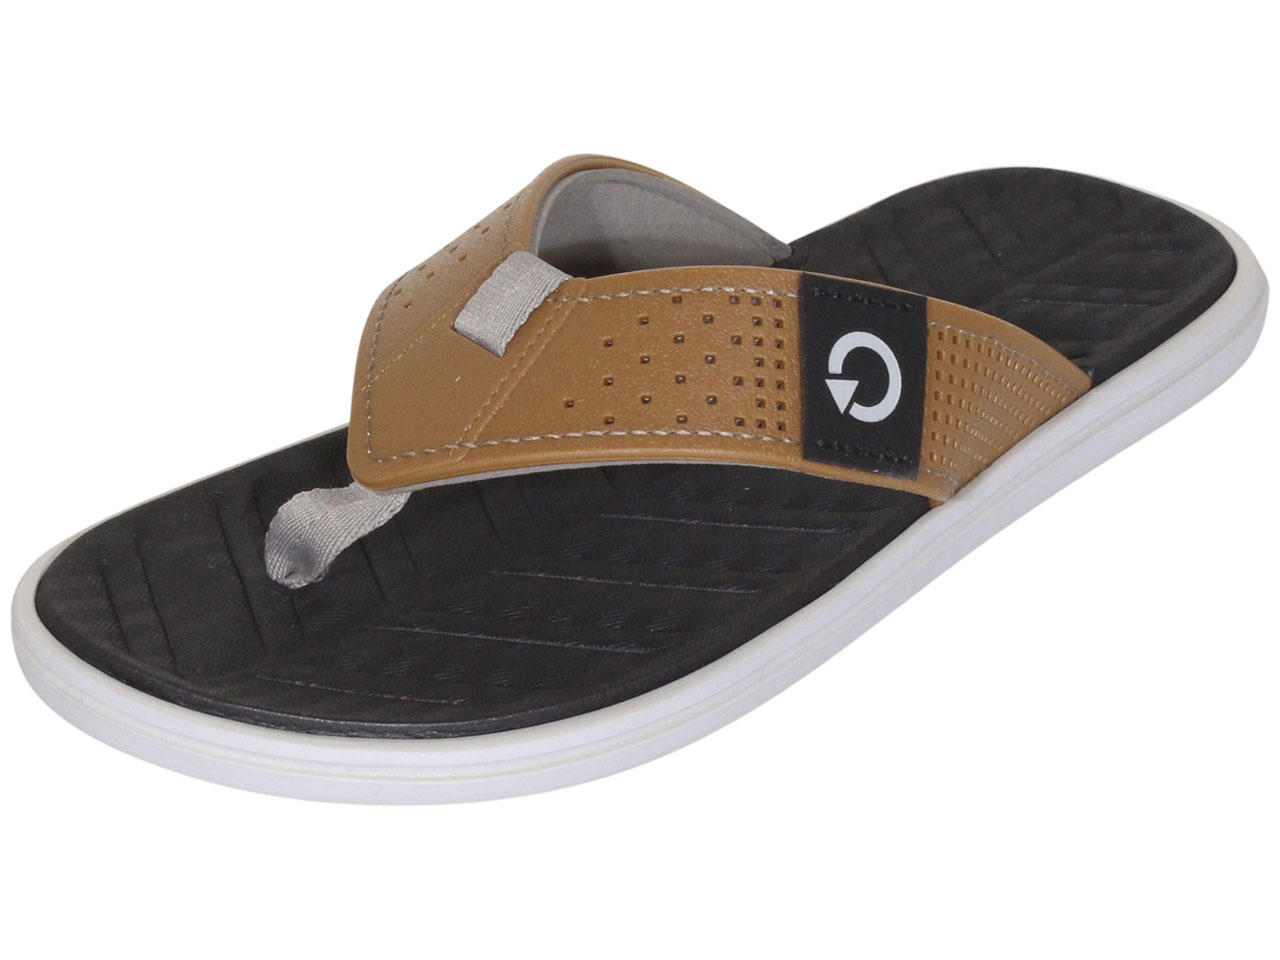 Cartago Malta-IV Flip Flops Men's Non-Slip Comfort Sandals Shoes